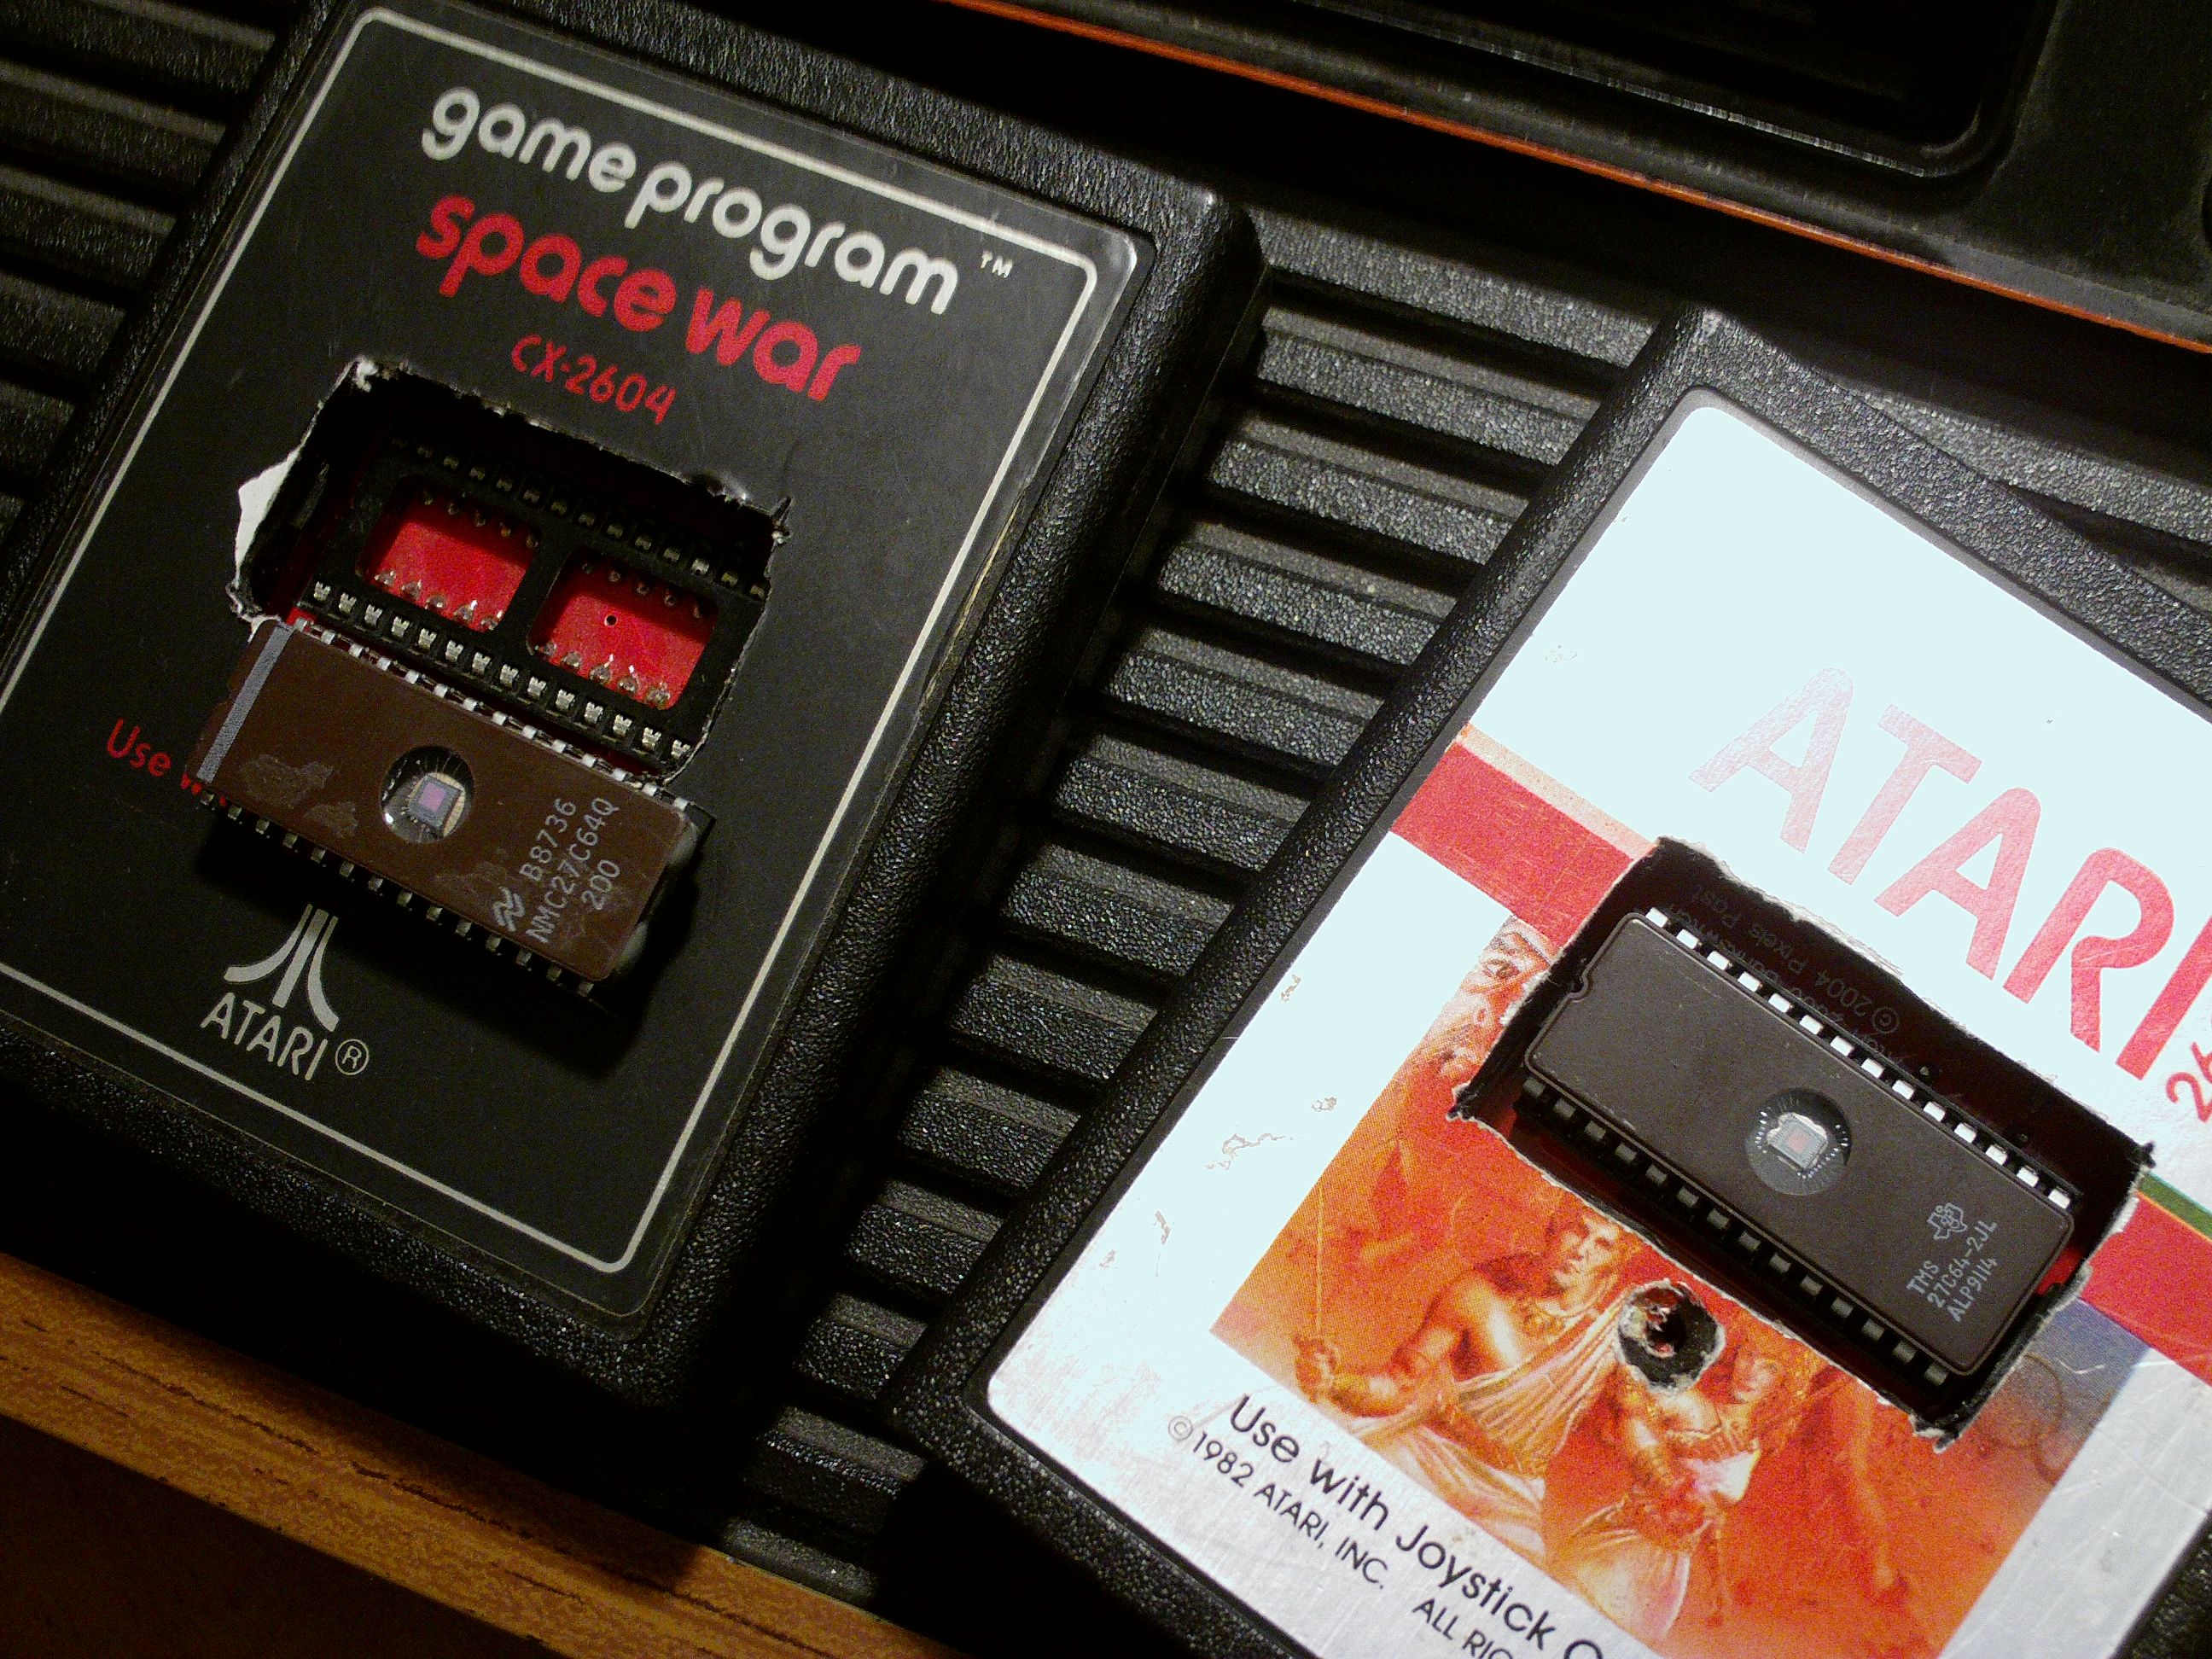 Atari Hacks  Referência sobre hacks de jogos do Atari 2600